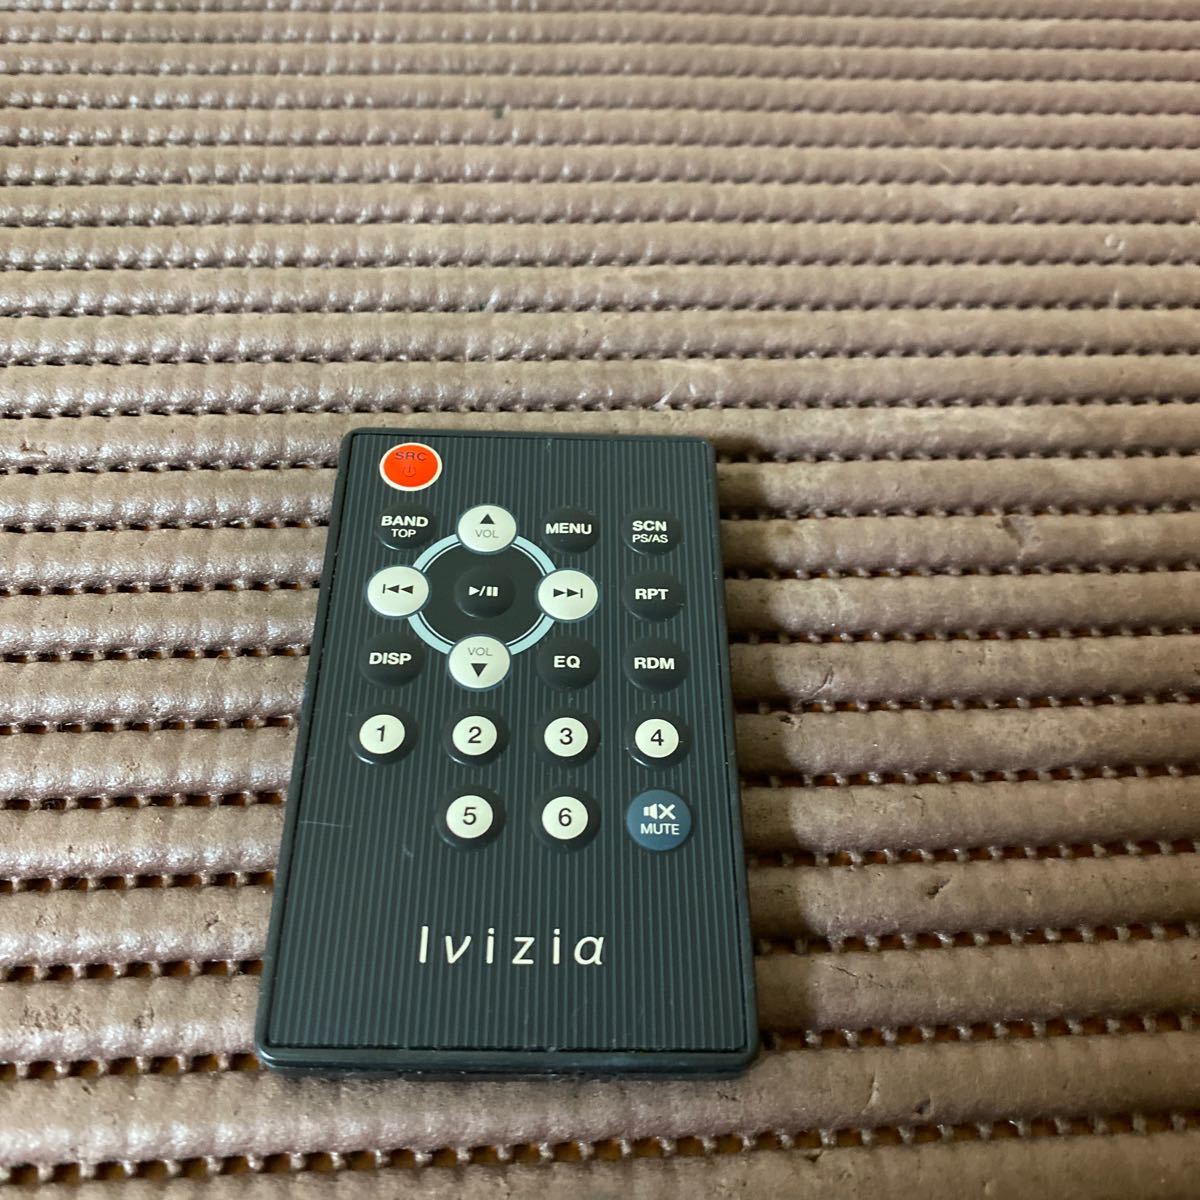 Ivizia audio remote control operation not yet verification Junk free shipping 